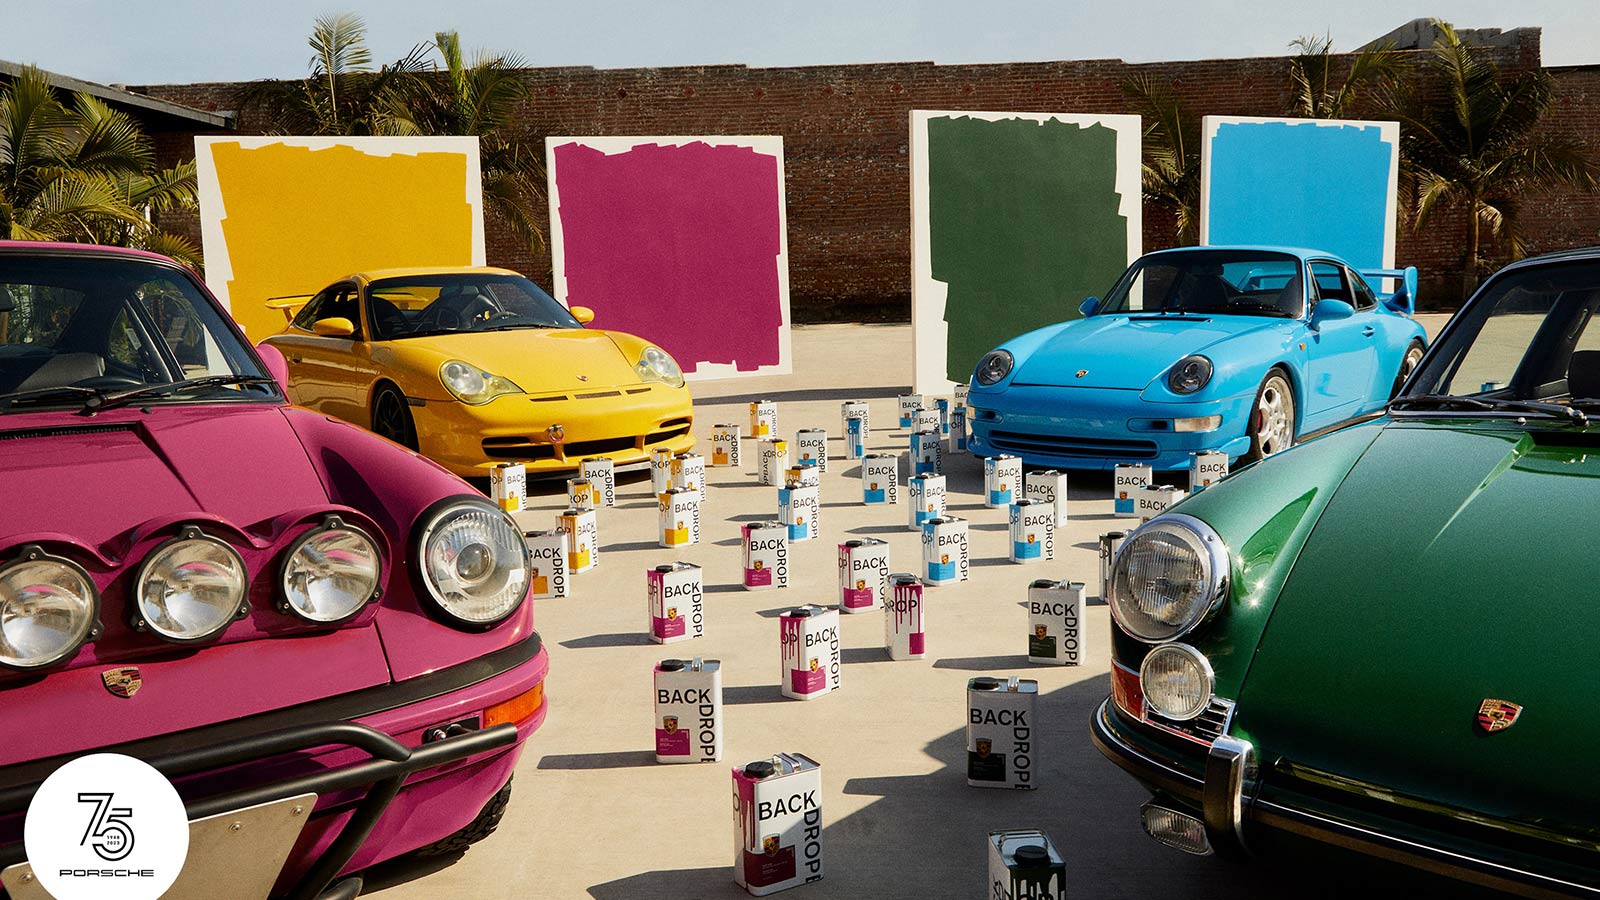 Porsche x Backdrop 75th anniversary collection